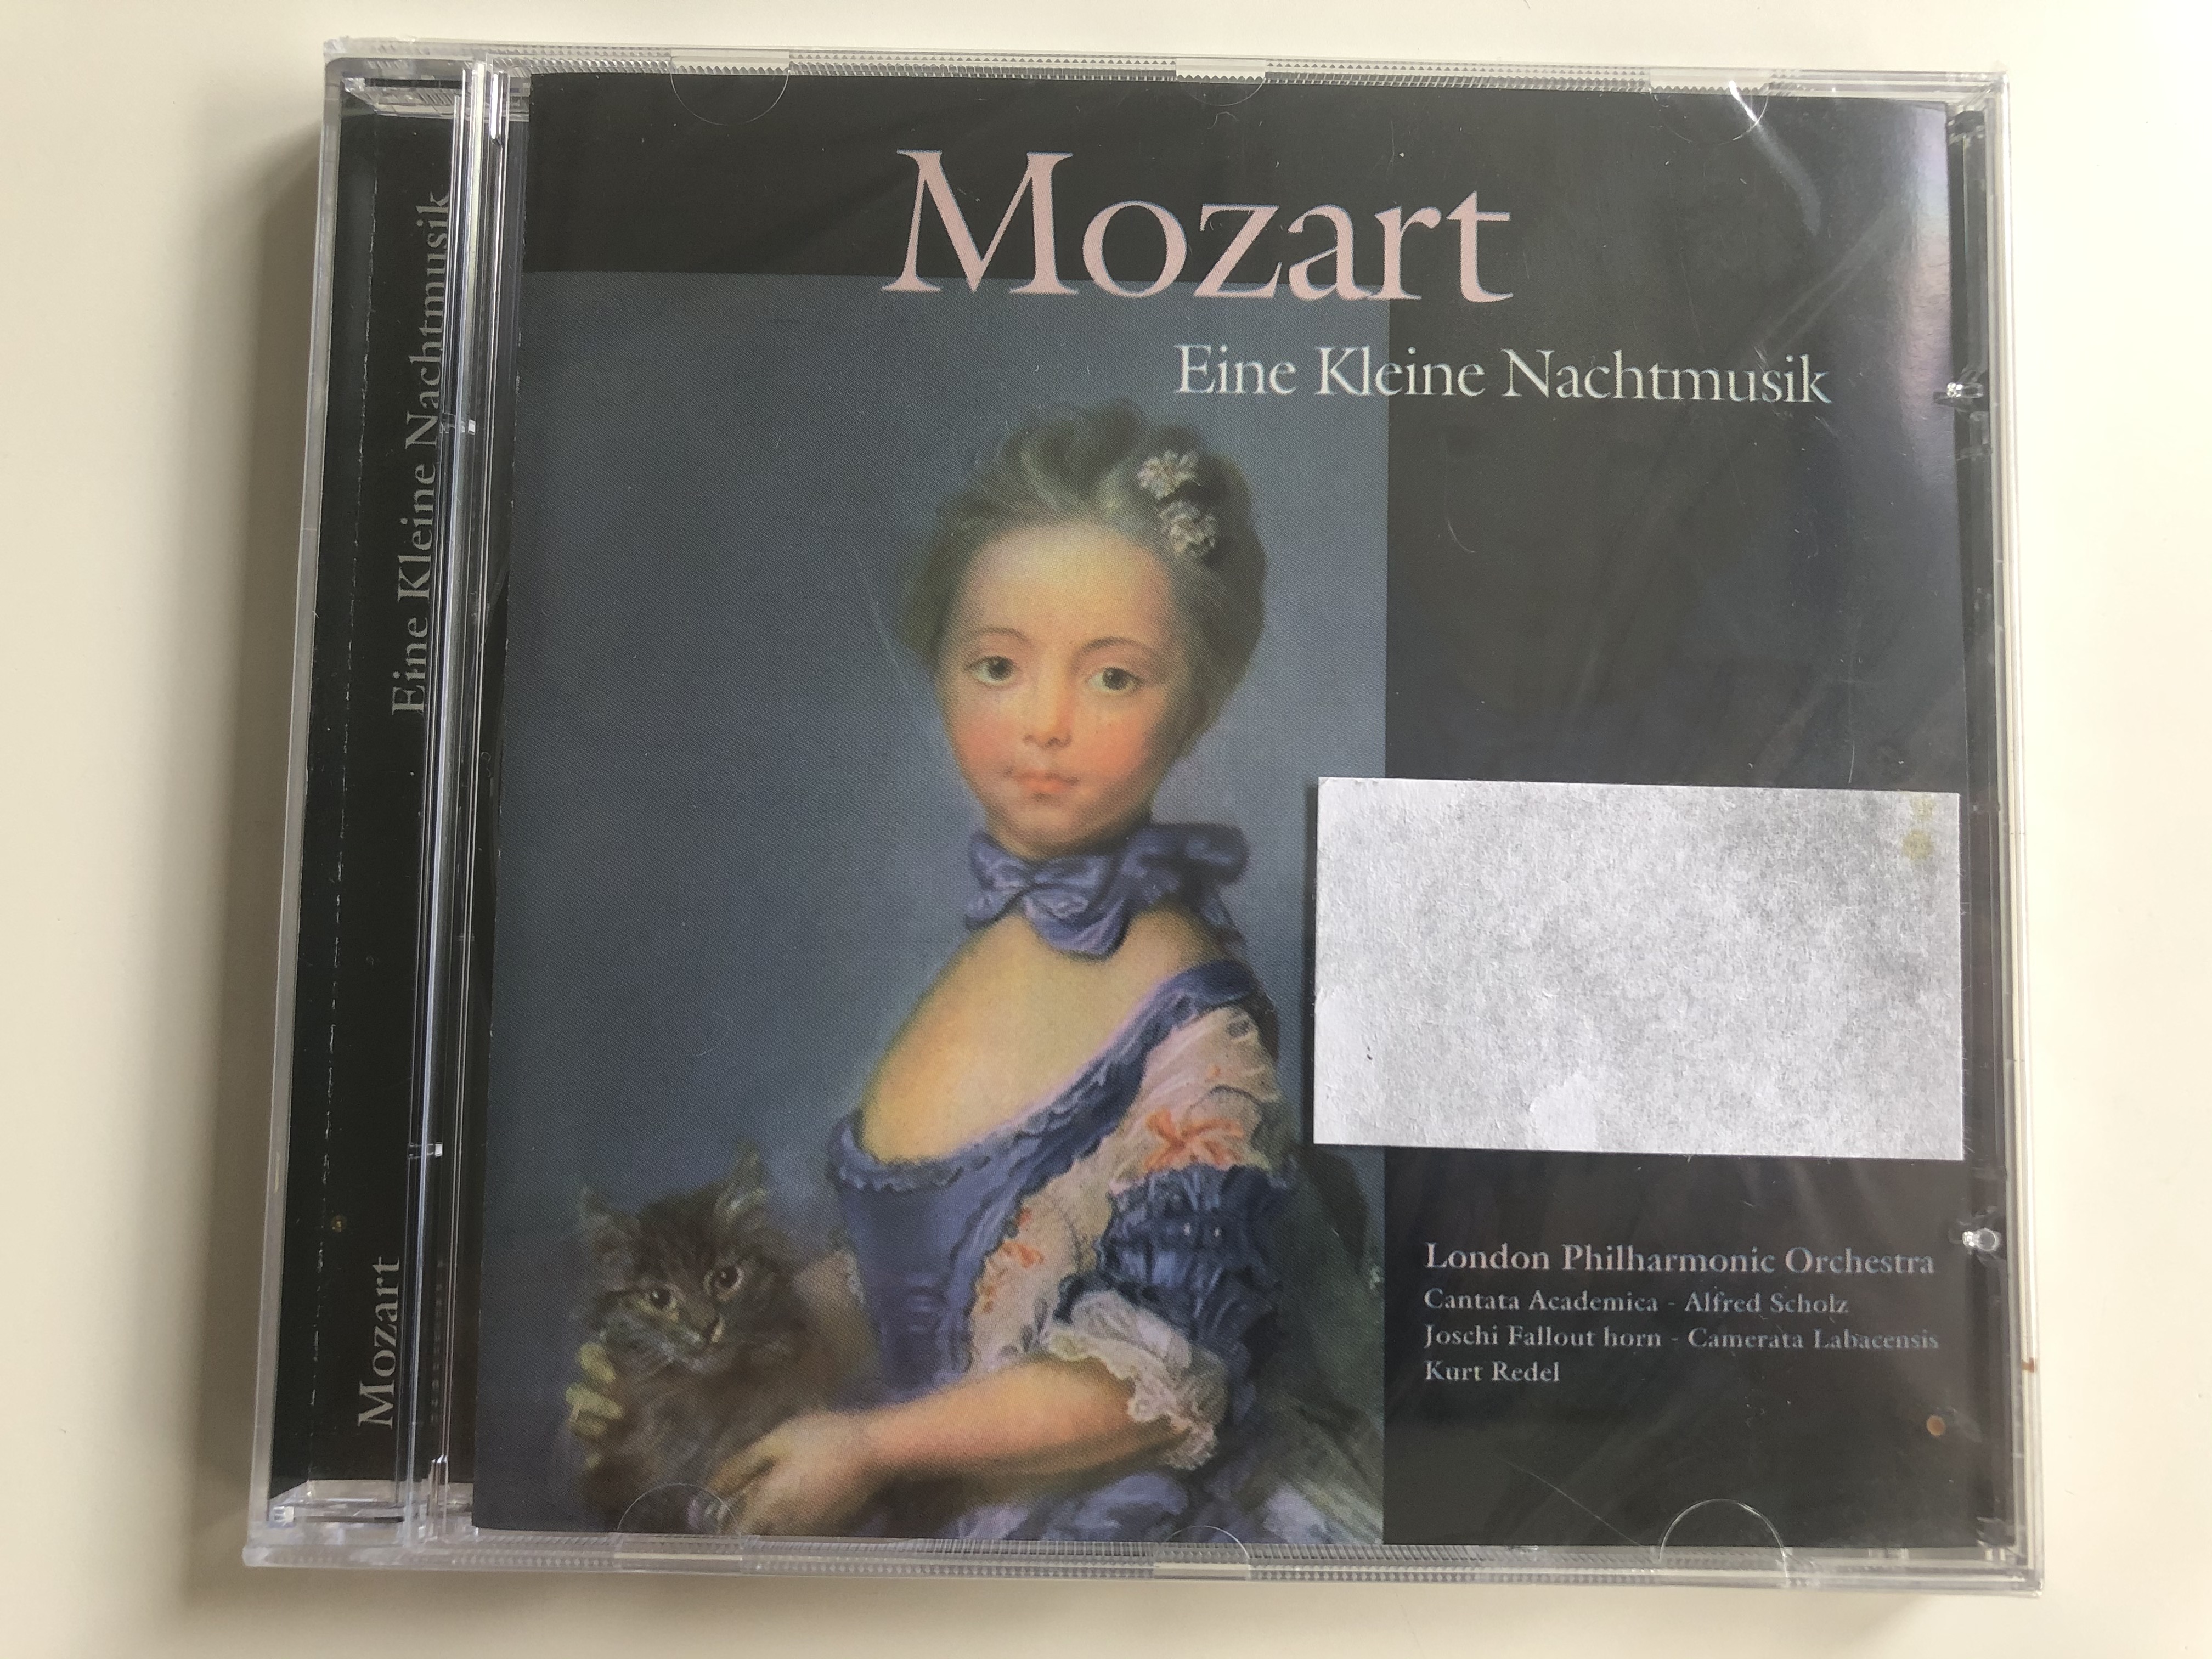 mozart-eine-kleine-nachtmusic-london-philharmonic-orchestra-cantata-academica-alfred-scholz-joschi-fallout-horn-camerata-labacensis-kurt-redel-a-play-classics-audio-cd-1998-9005-2-1-.jpg